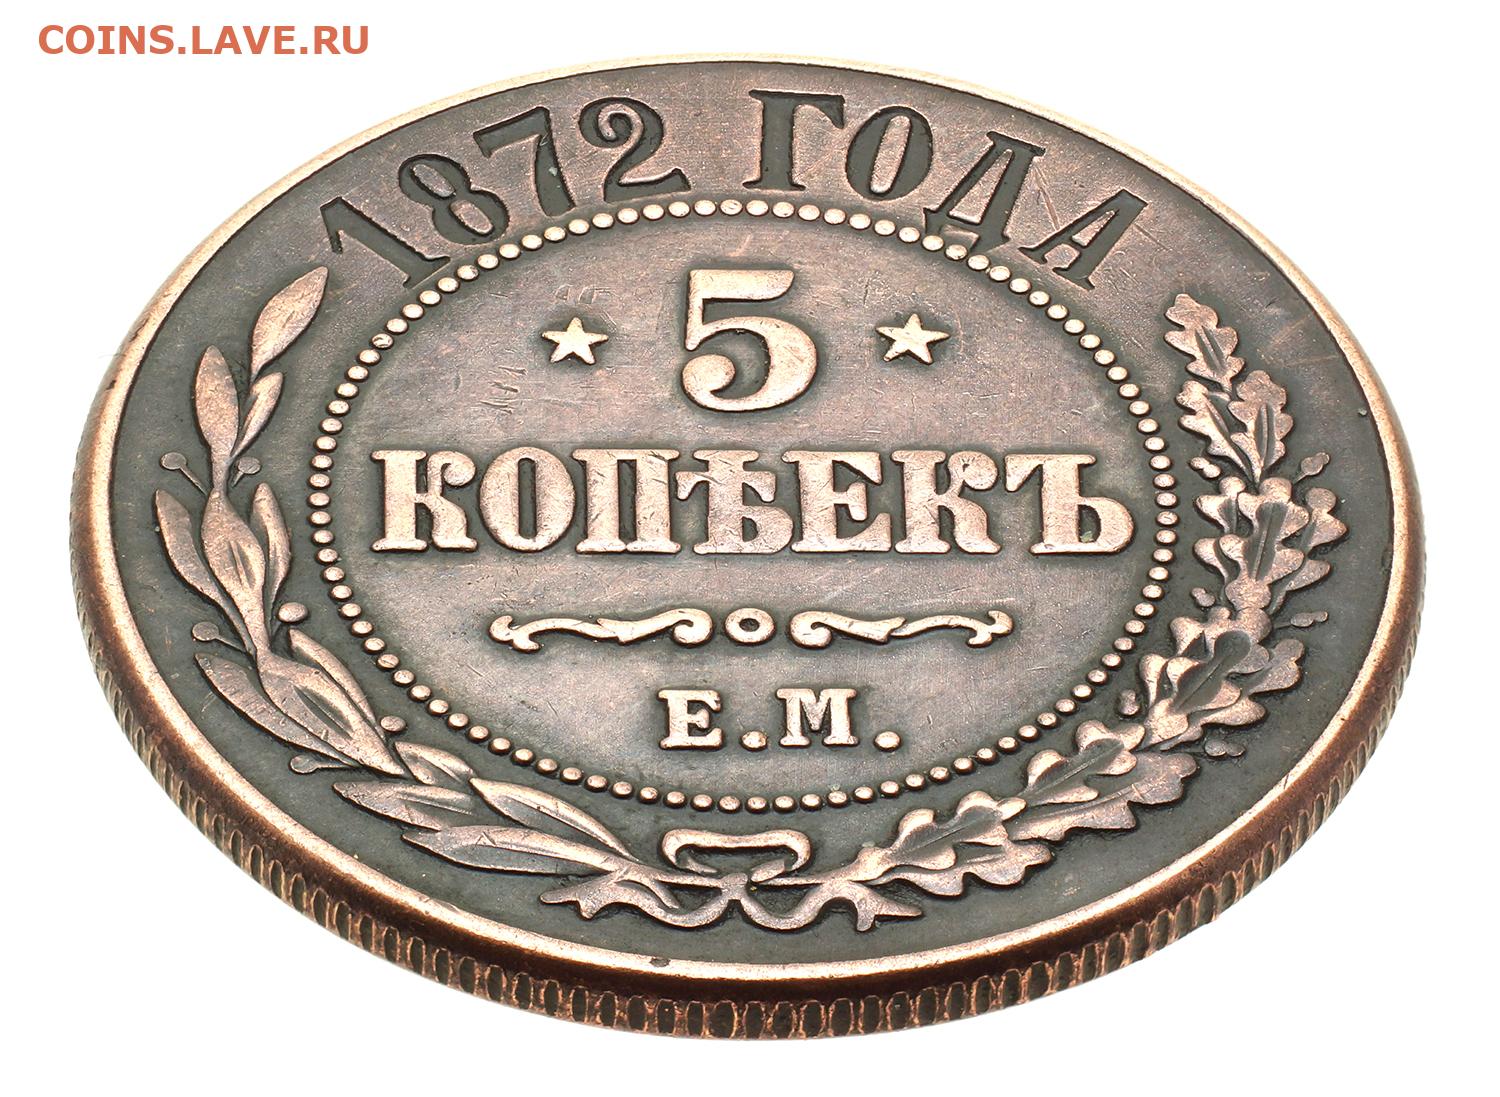 5 копеек 1872. Монета 5 копеек 1872. Монета 1872 года. Монета России 5 копеек 1872 года.